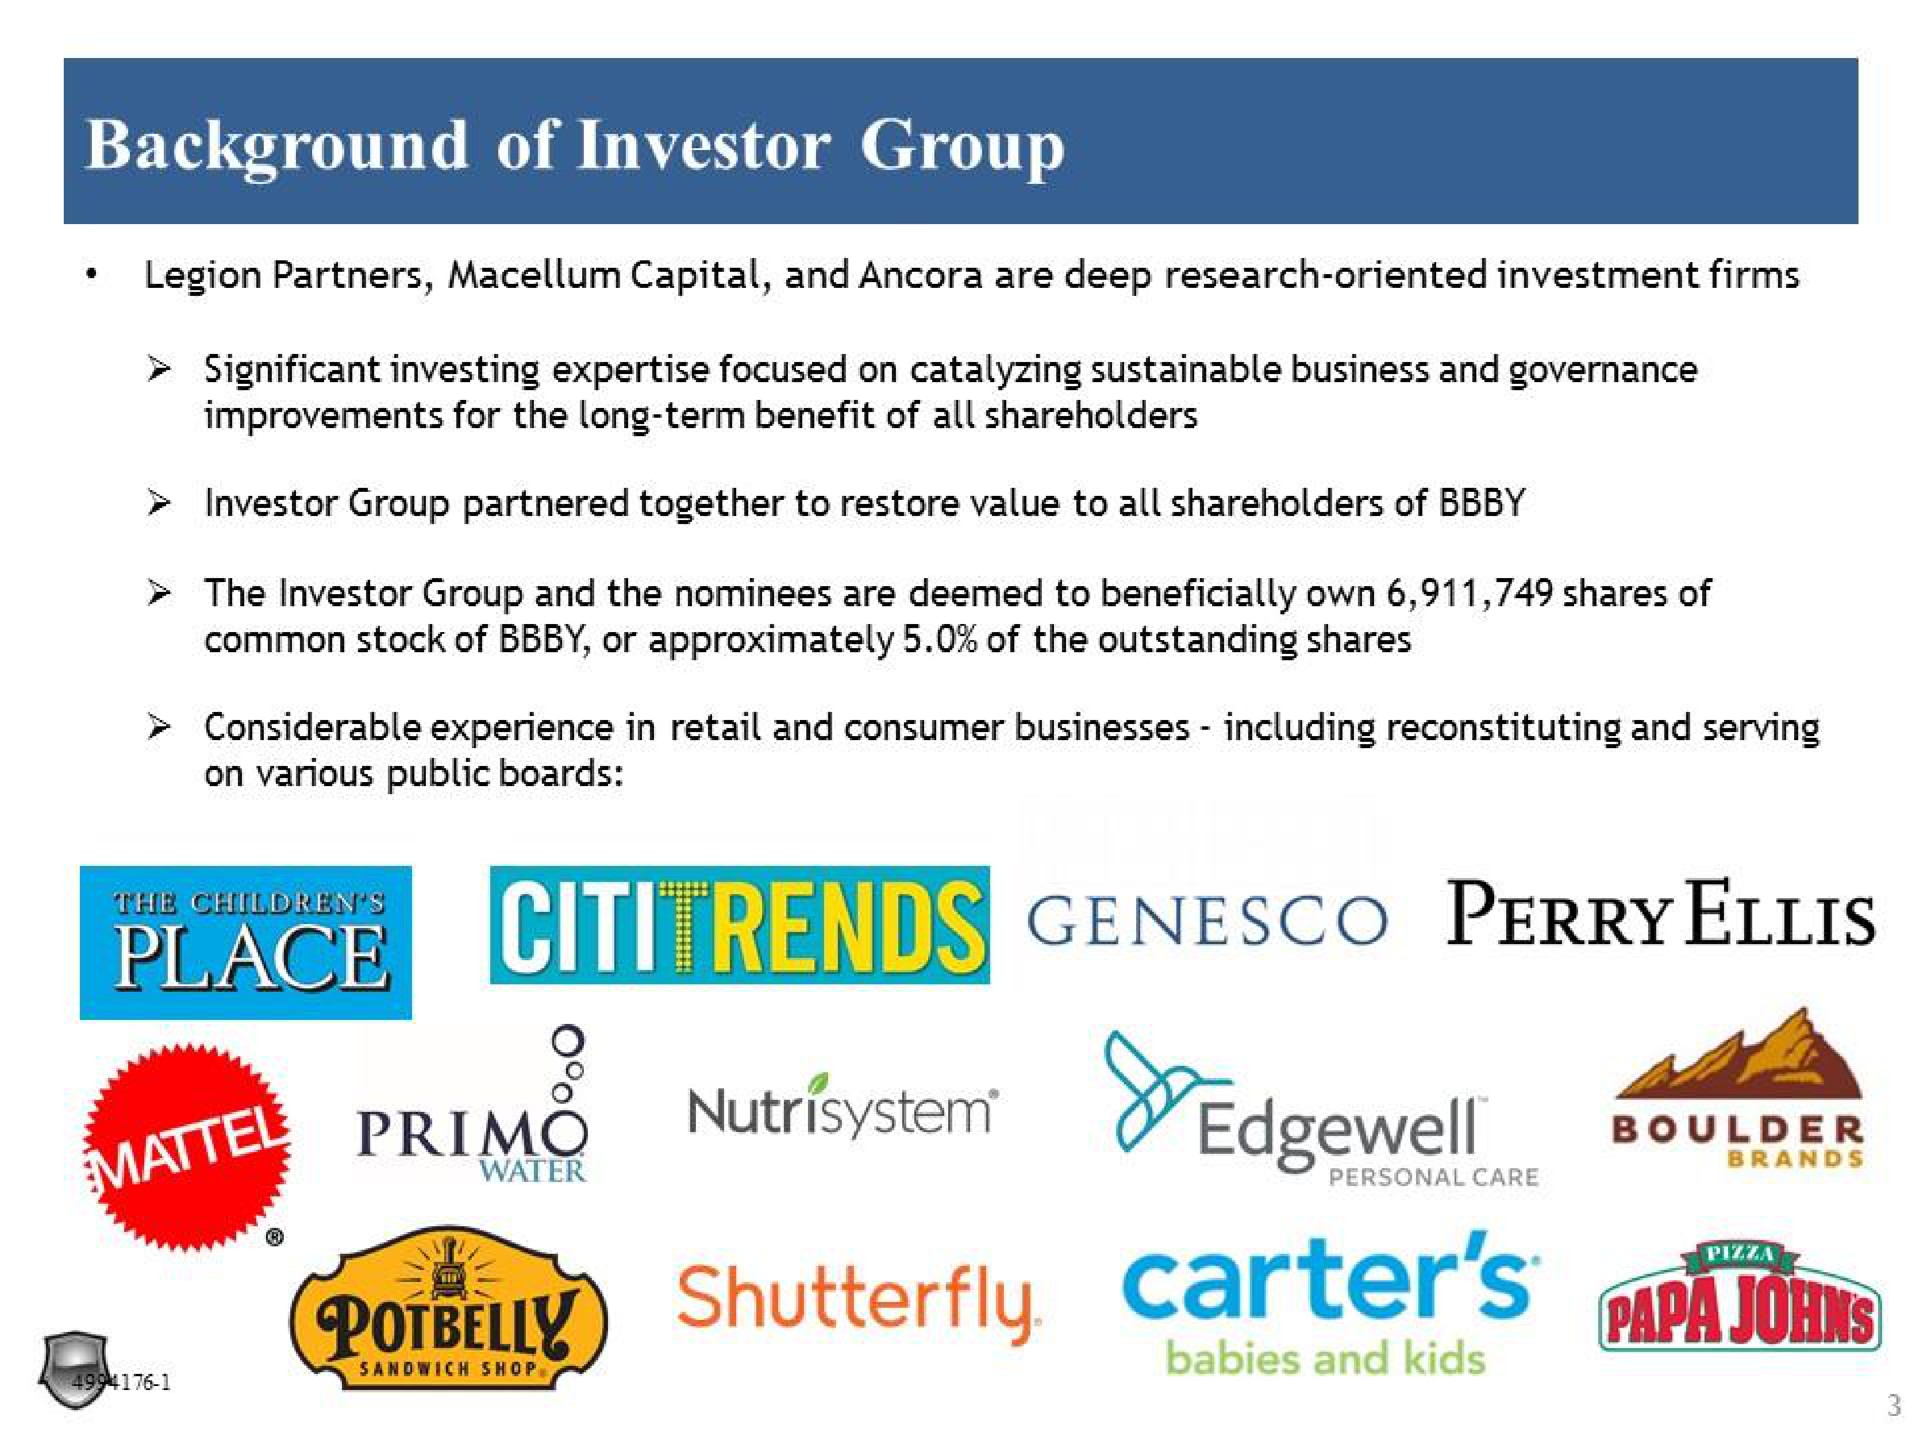 background of investor group place bun boulder carter | Legion Partners